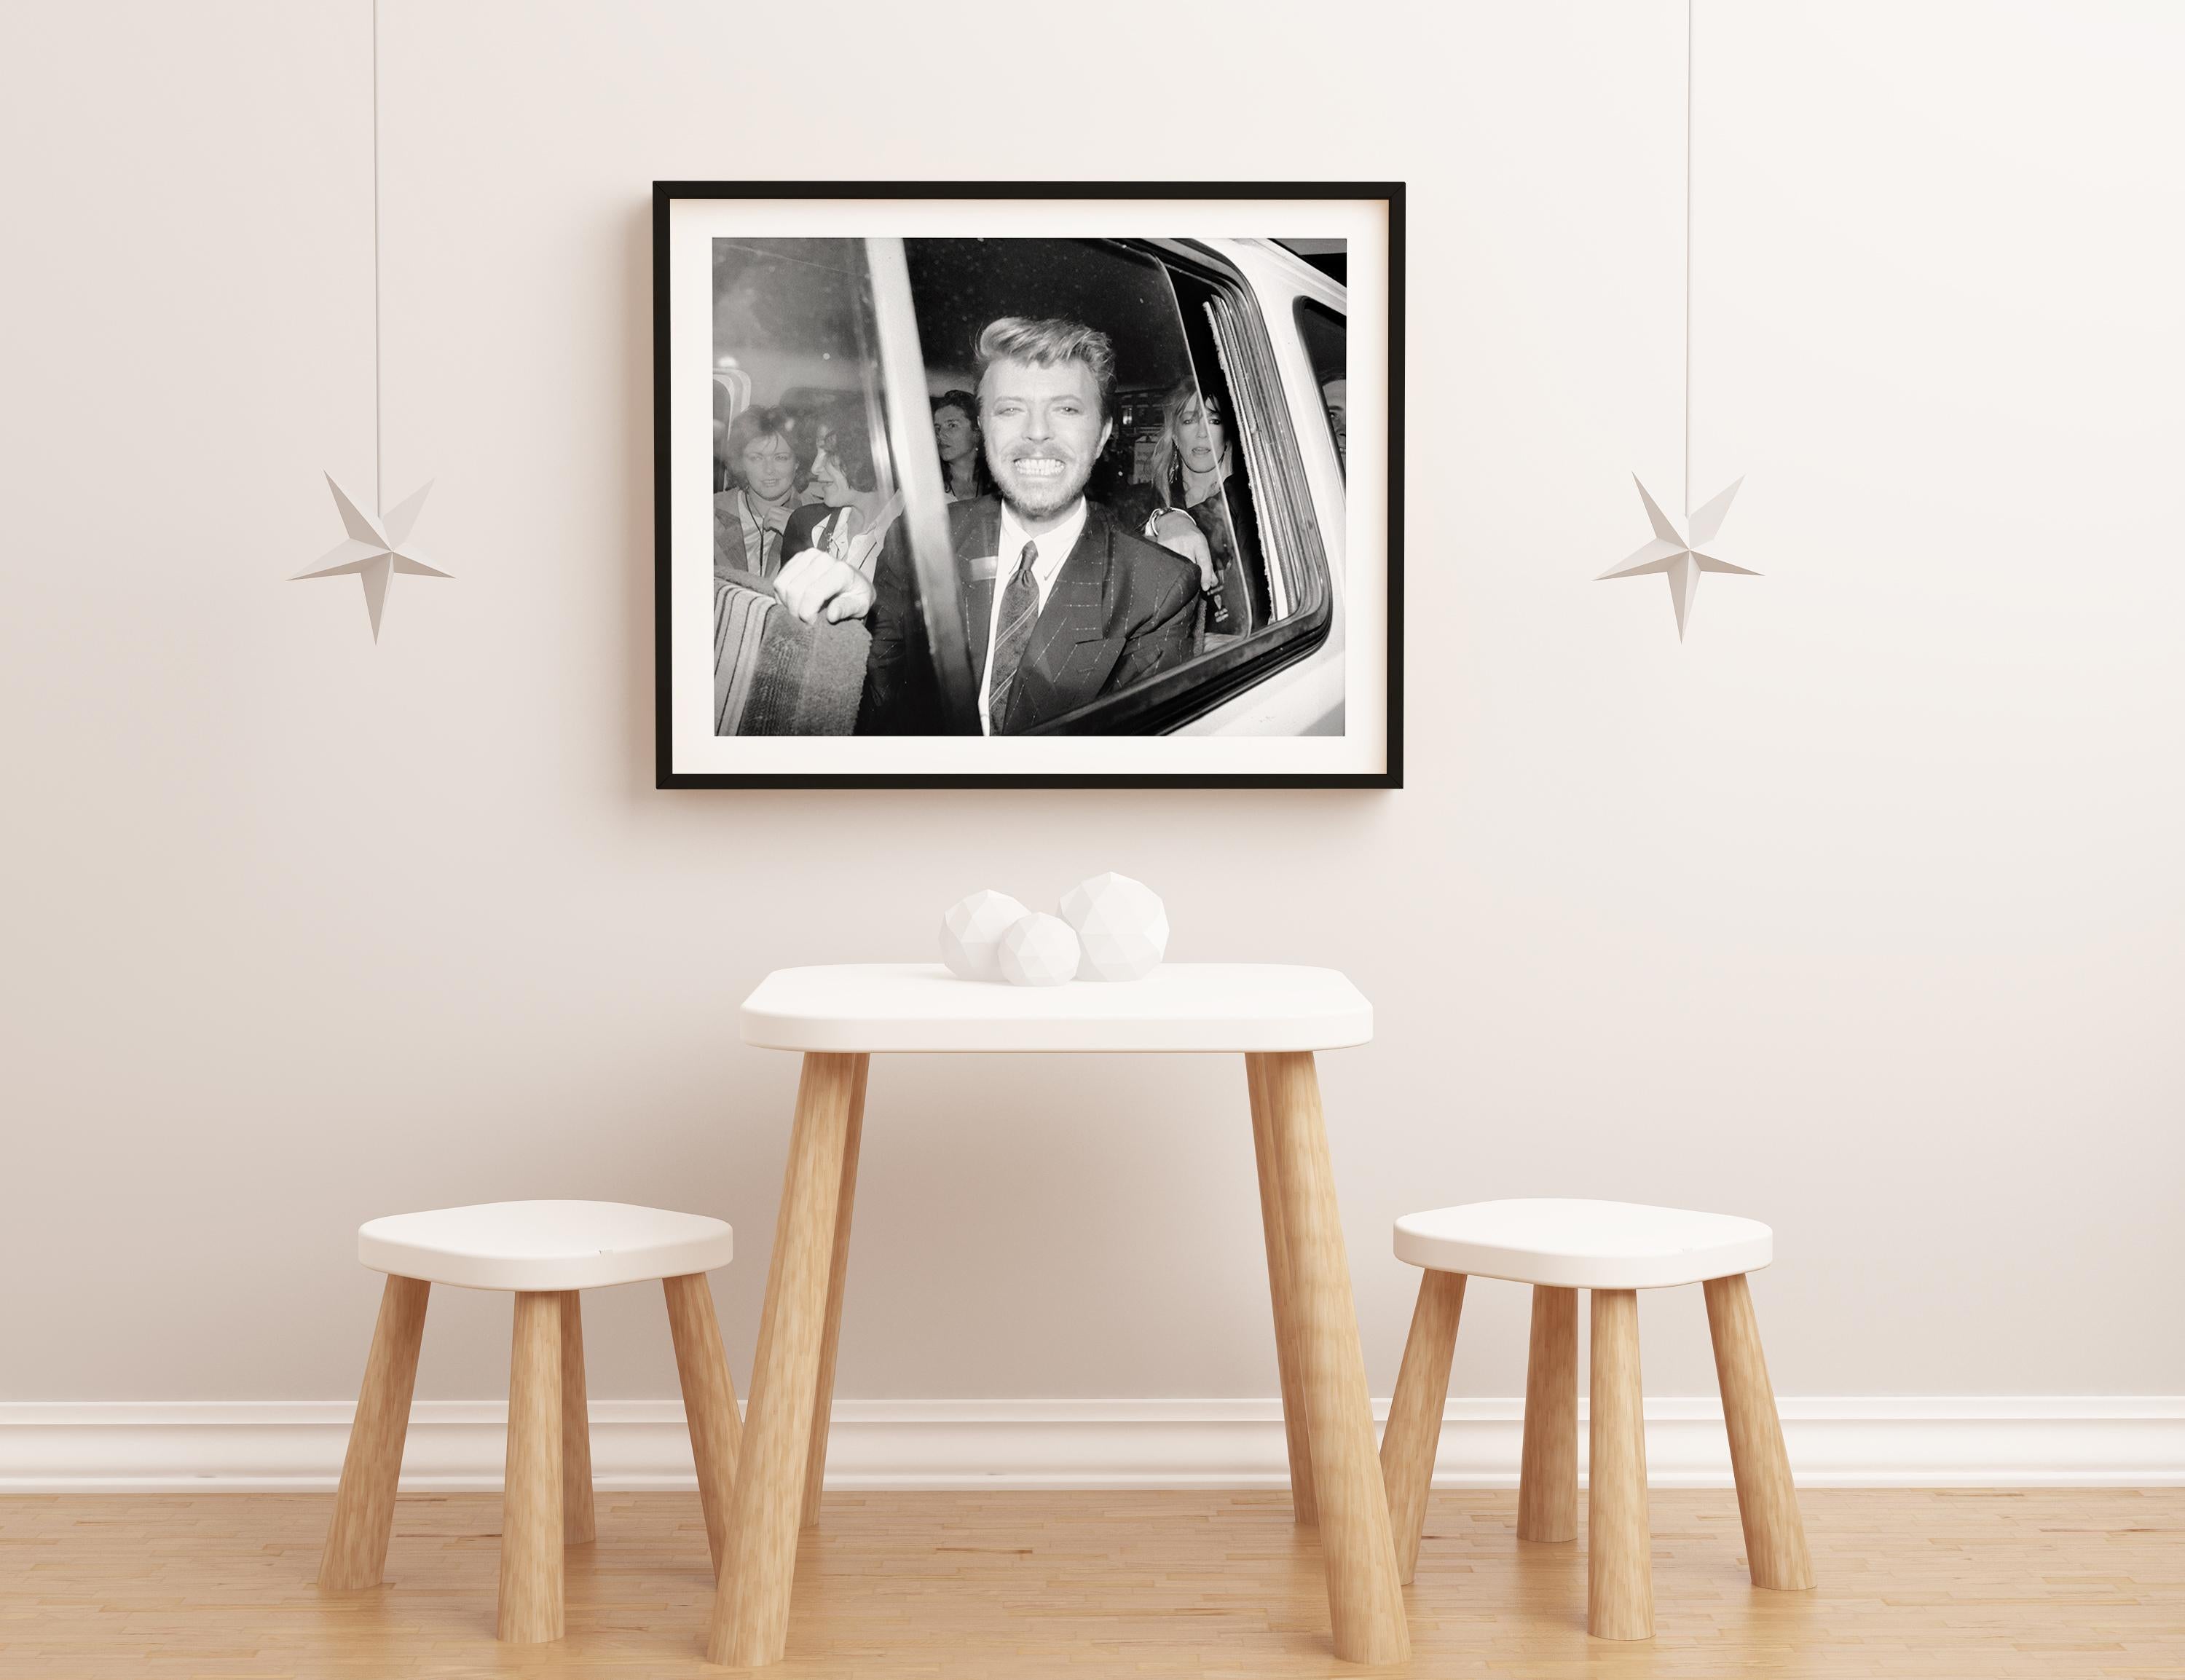 David Bowie: Big Smile in Car Window Globe Photos Fine Art Print - Black Portrait Photograph by Alan Davidson